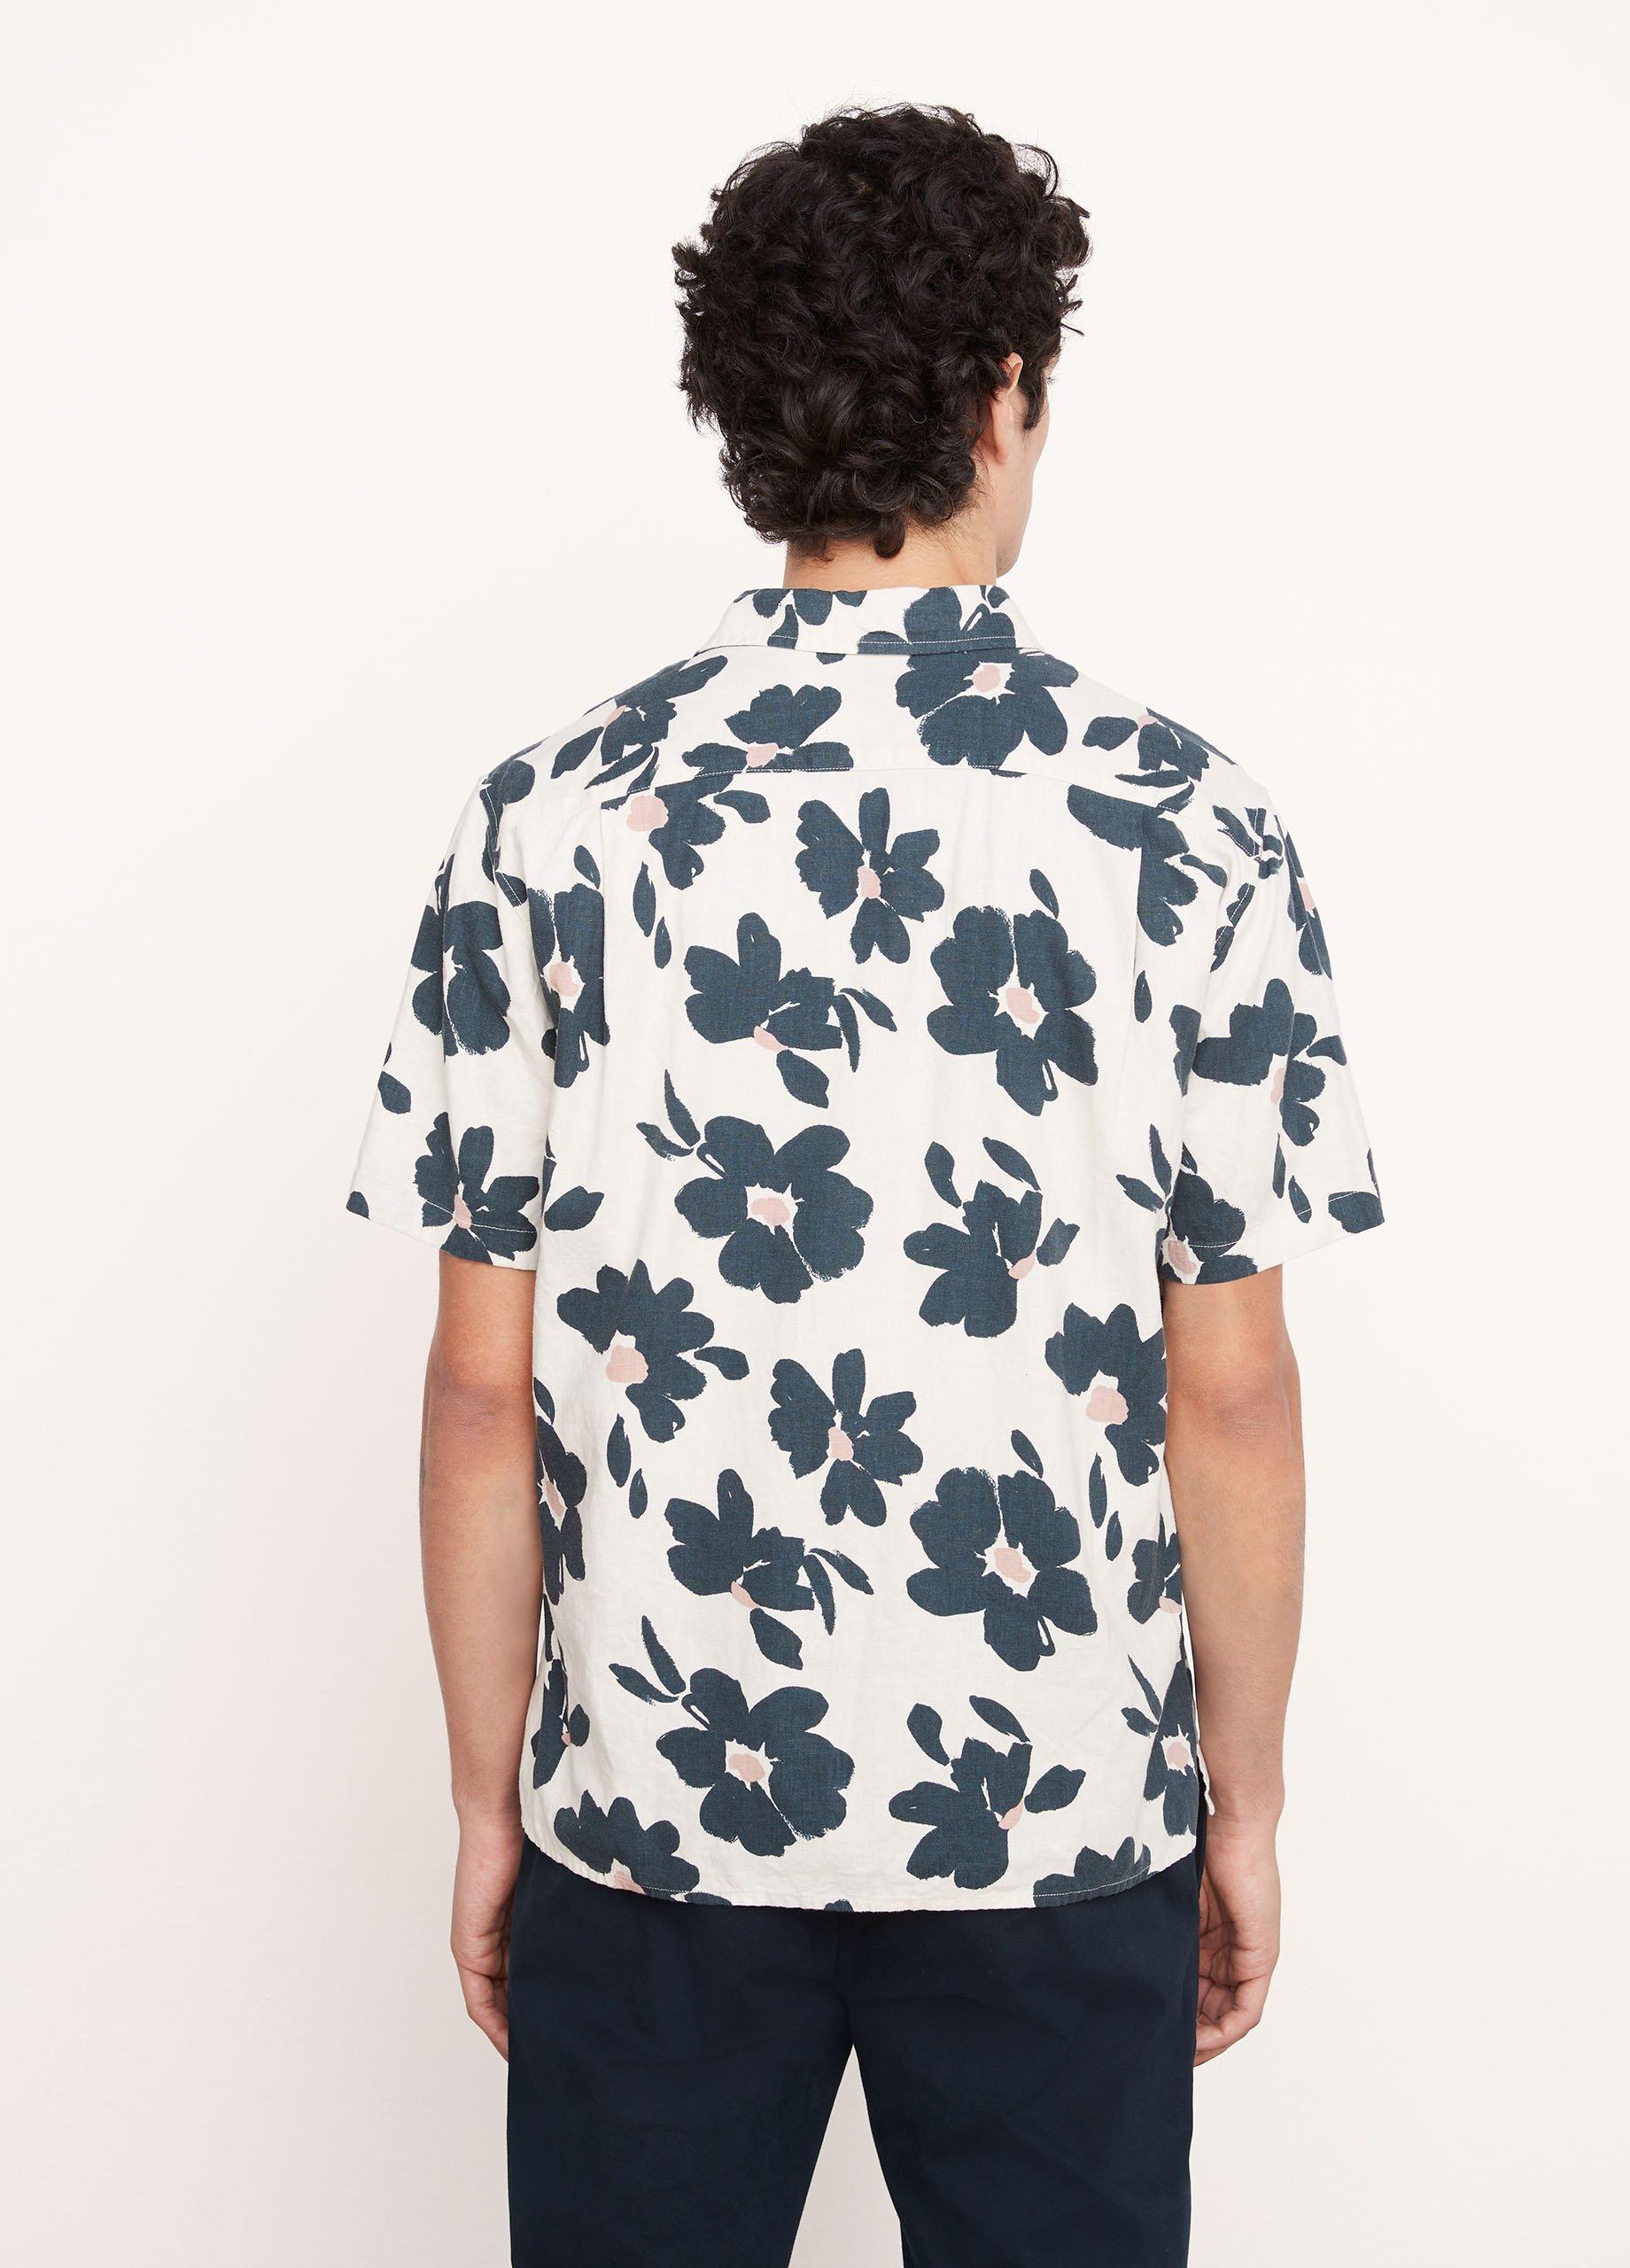 Impressionist Flower T-Shirt from MacAi & Co Easy Wear Unisex